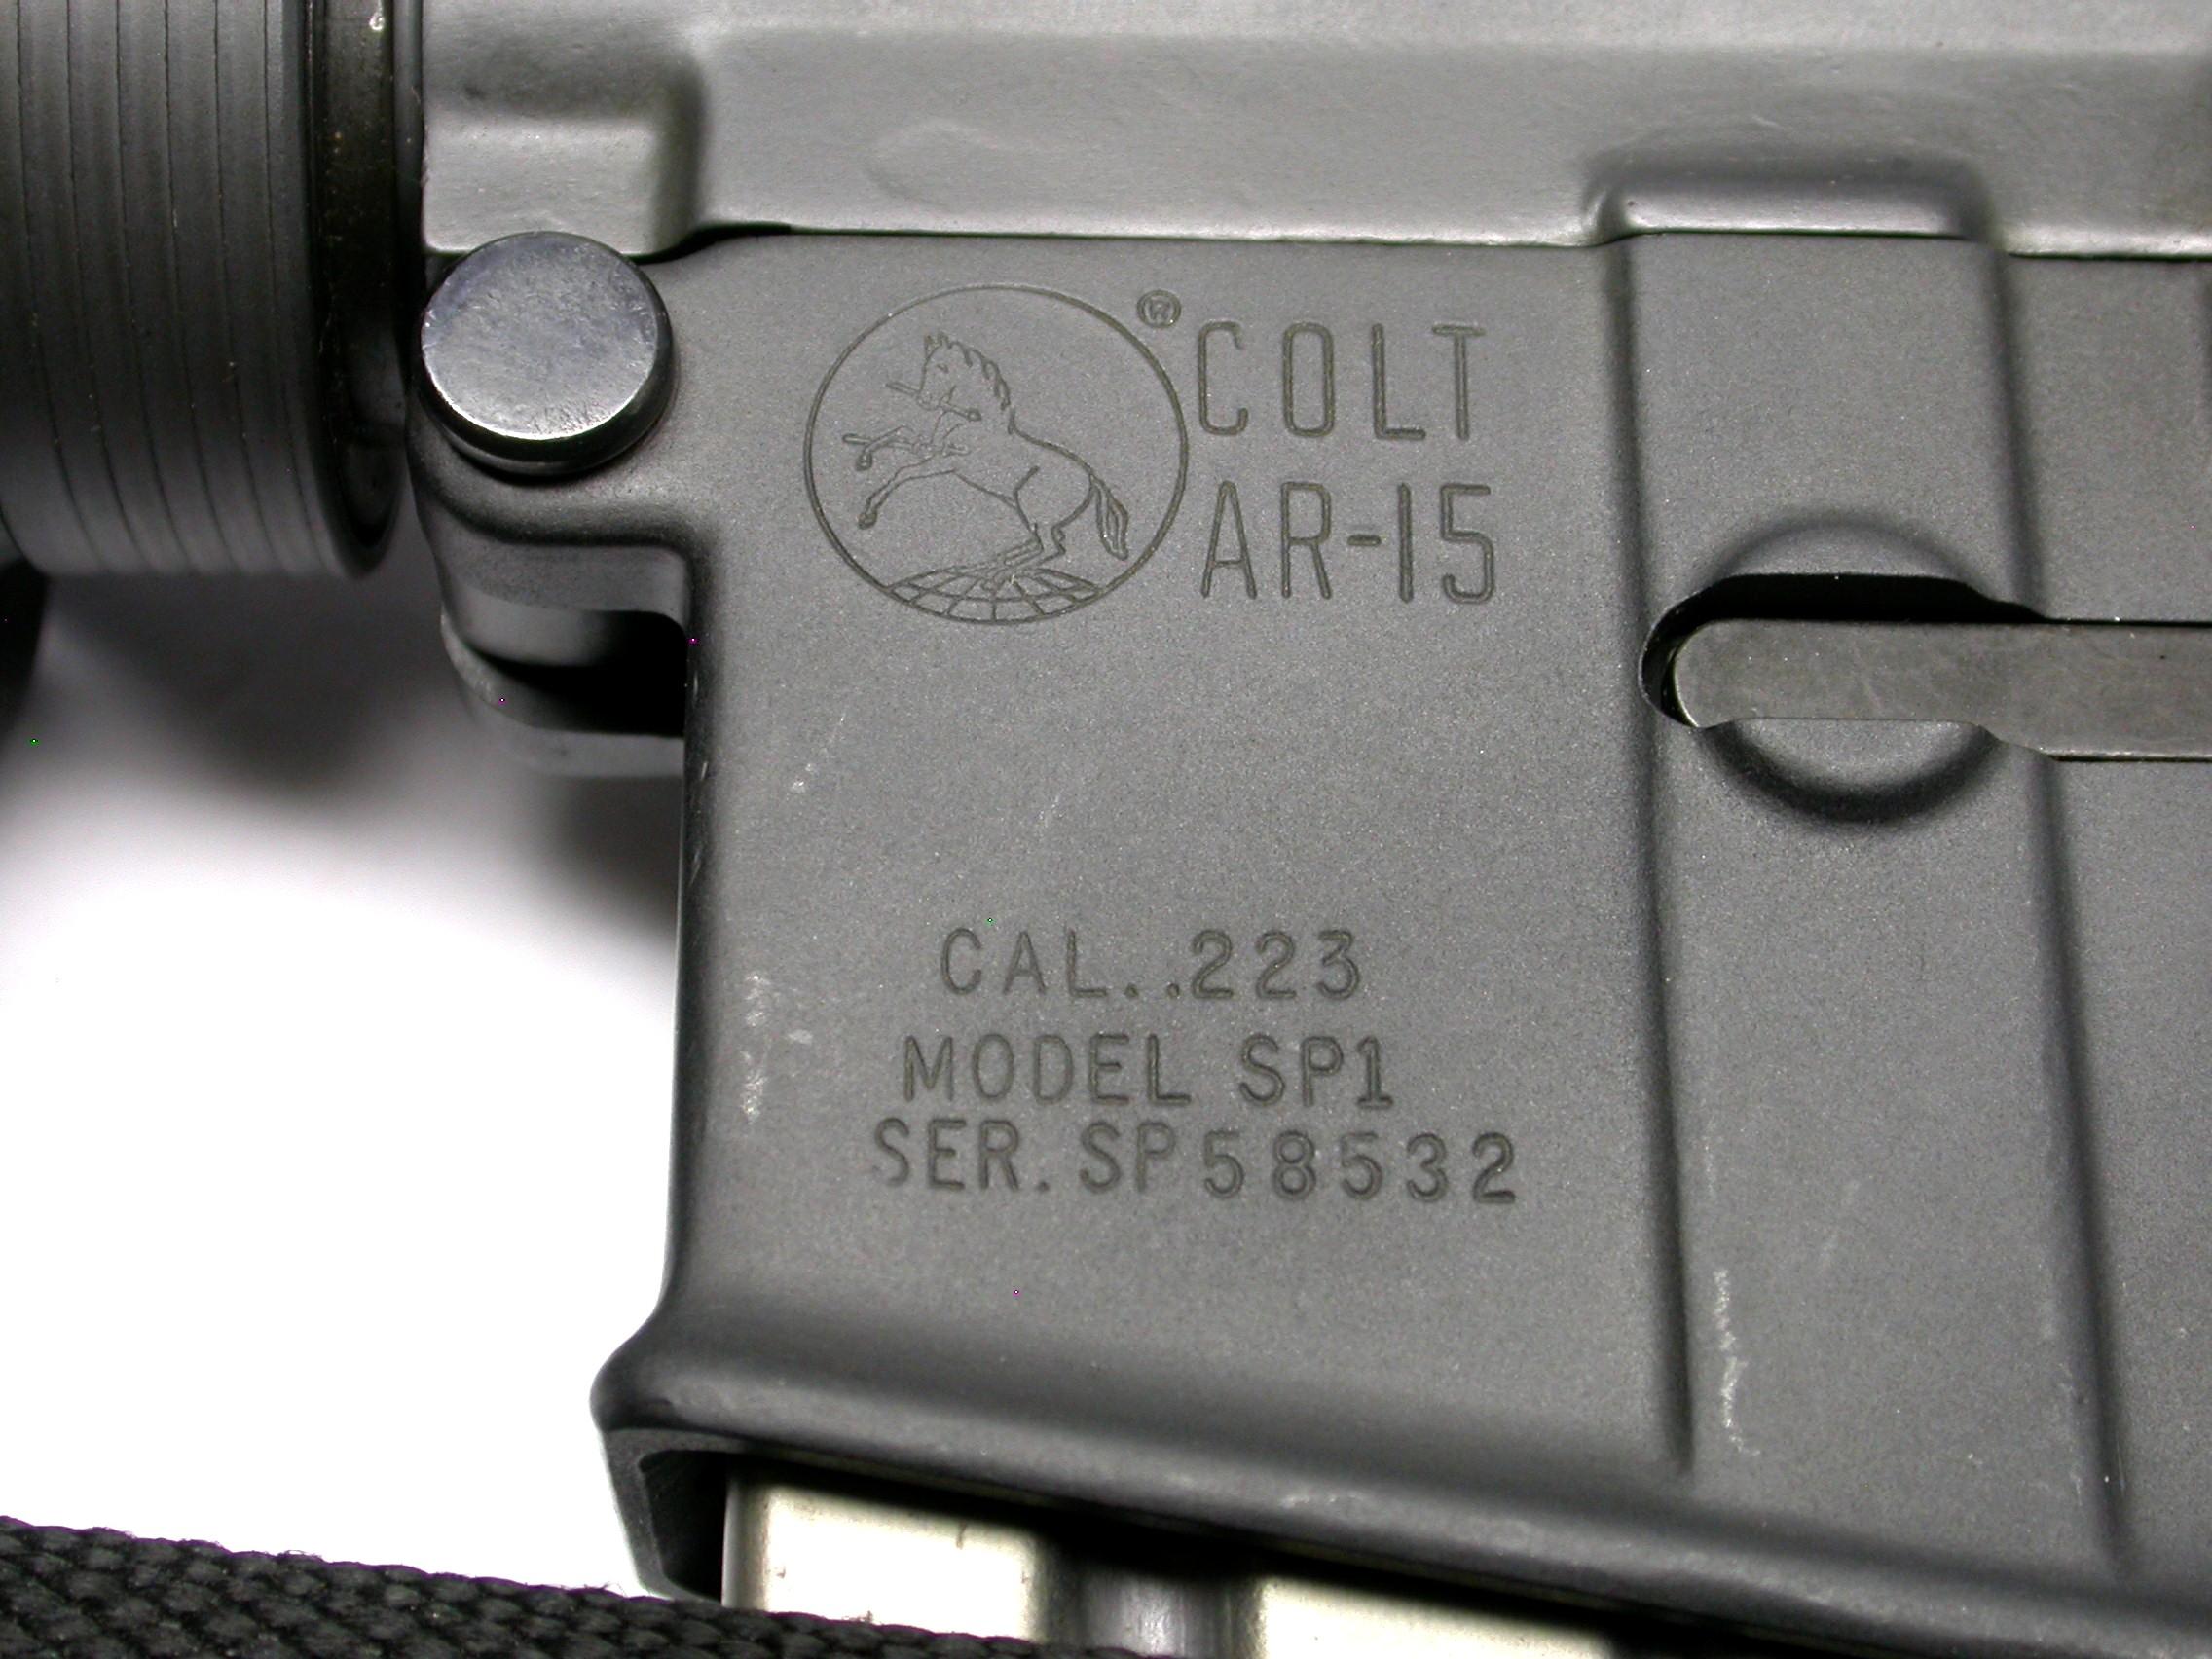 Original Colt SP-1 .223/5.56mm Semi-Automatic Rifle - FFL #SP-58532 (A)